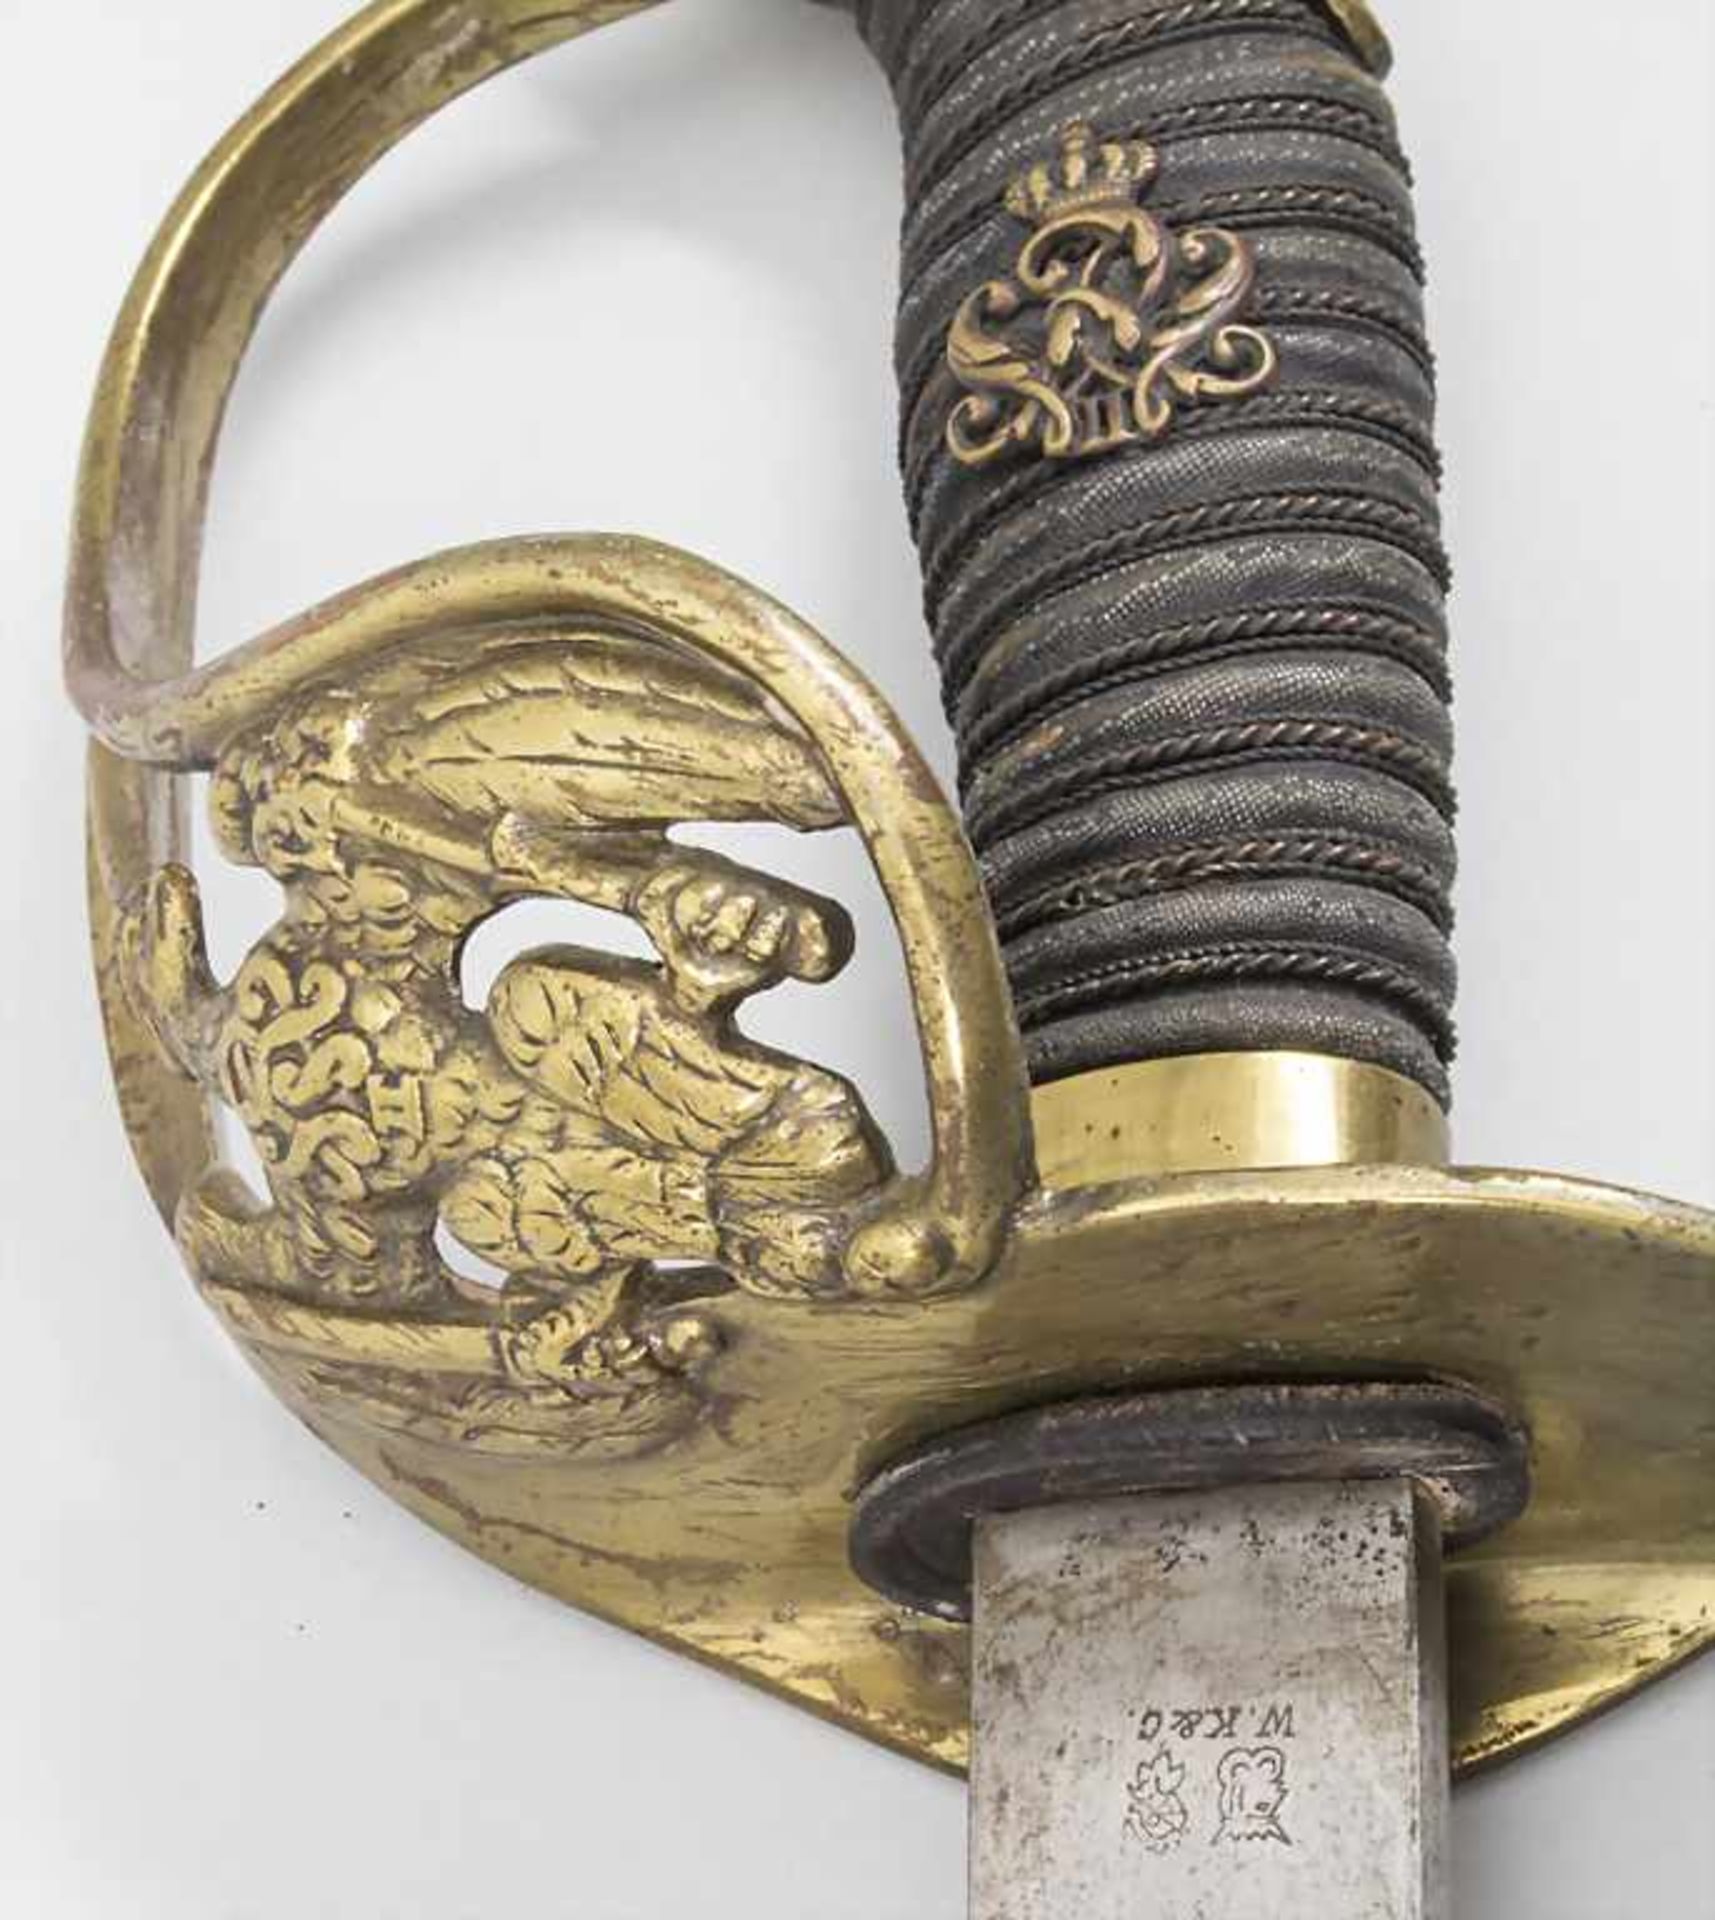 Infanterie Offiziersdegen / A infantry officer's sword, Preußen, Modell 1889 - Image 2 of 7